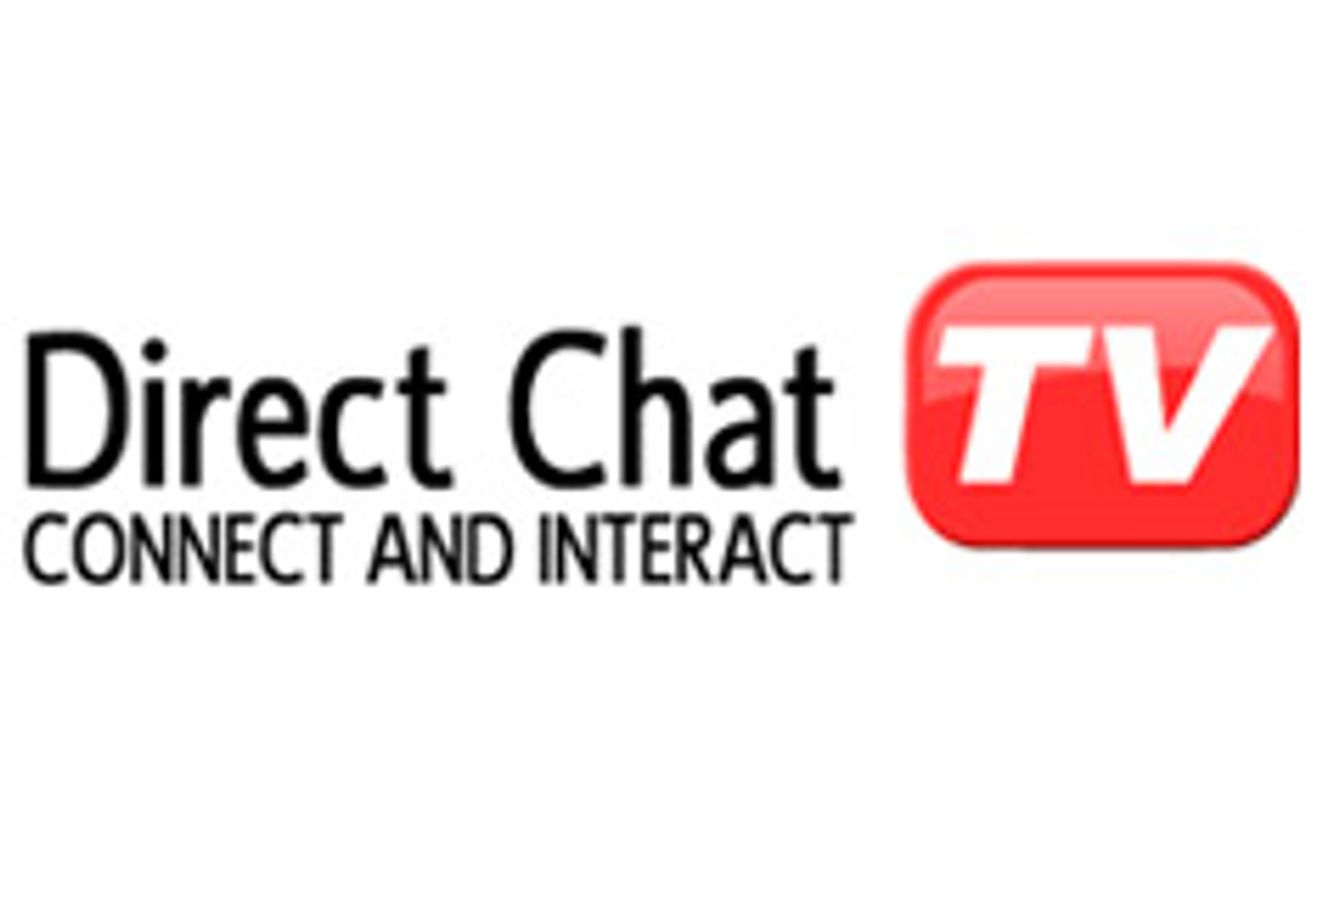 DirectChat.TV